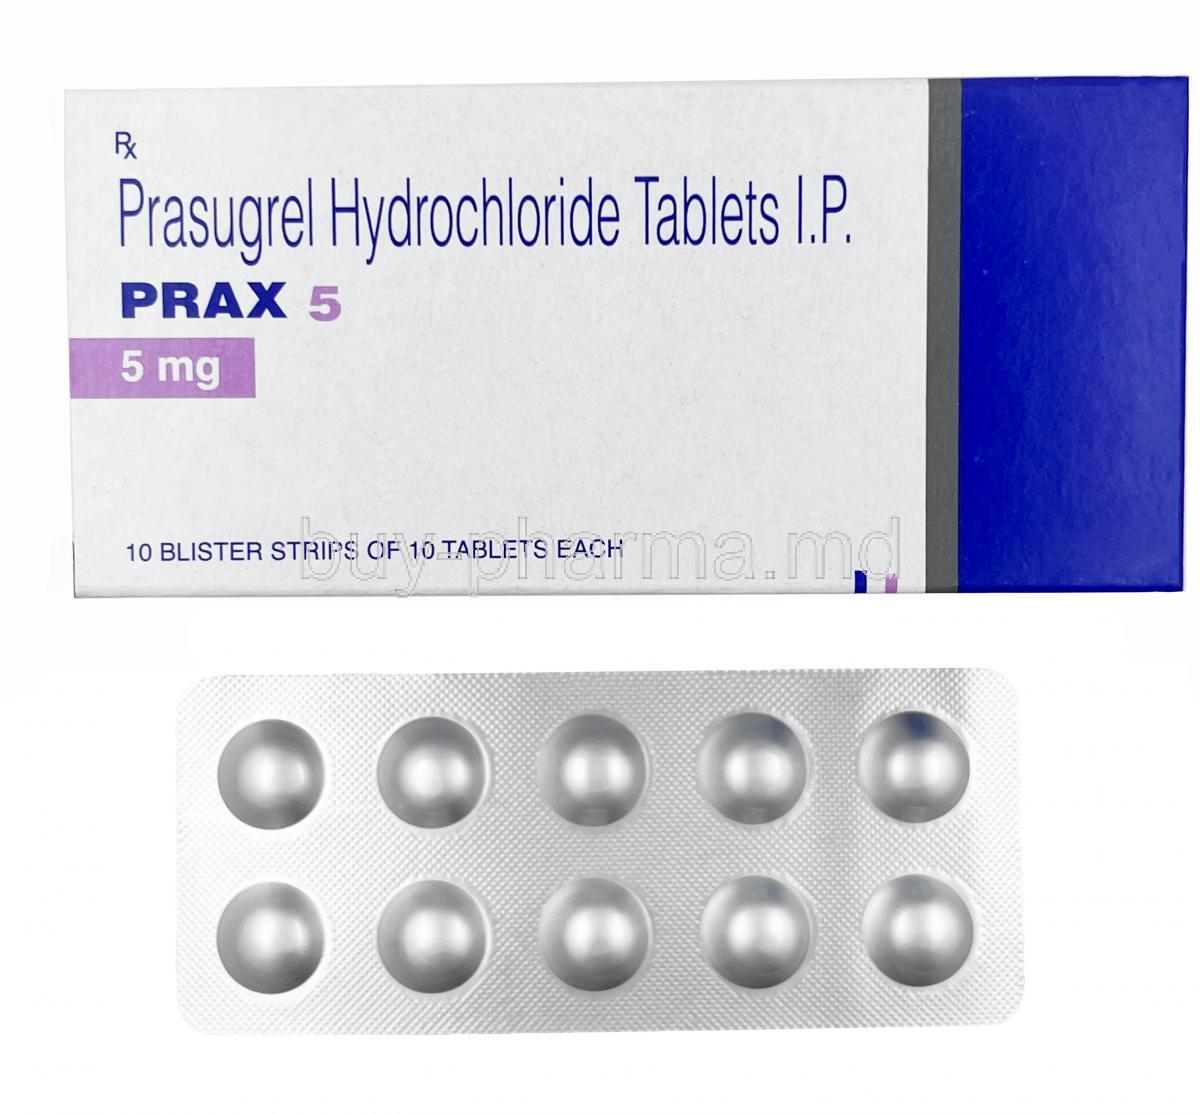 Prax 5, Prasugrel 5mg, Torrent Pharma, Box, Blisterpack